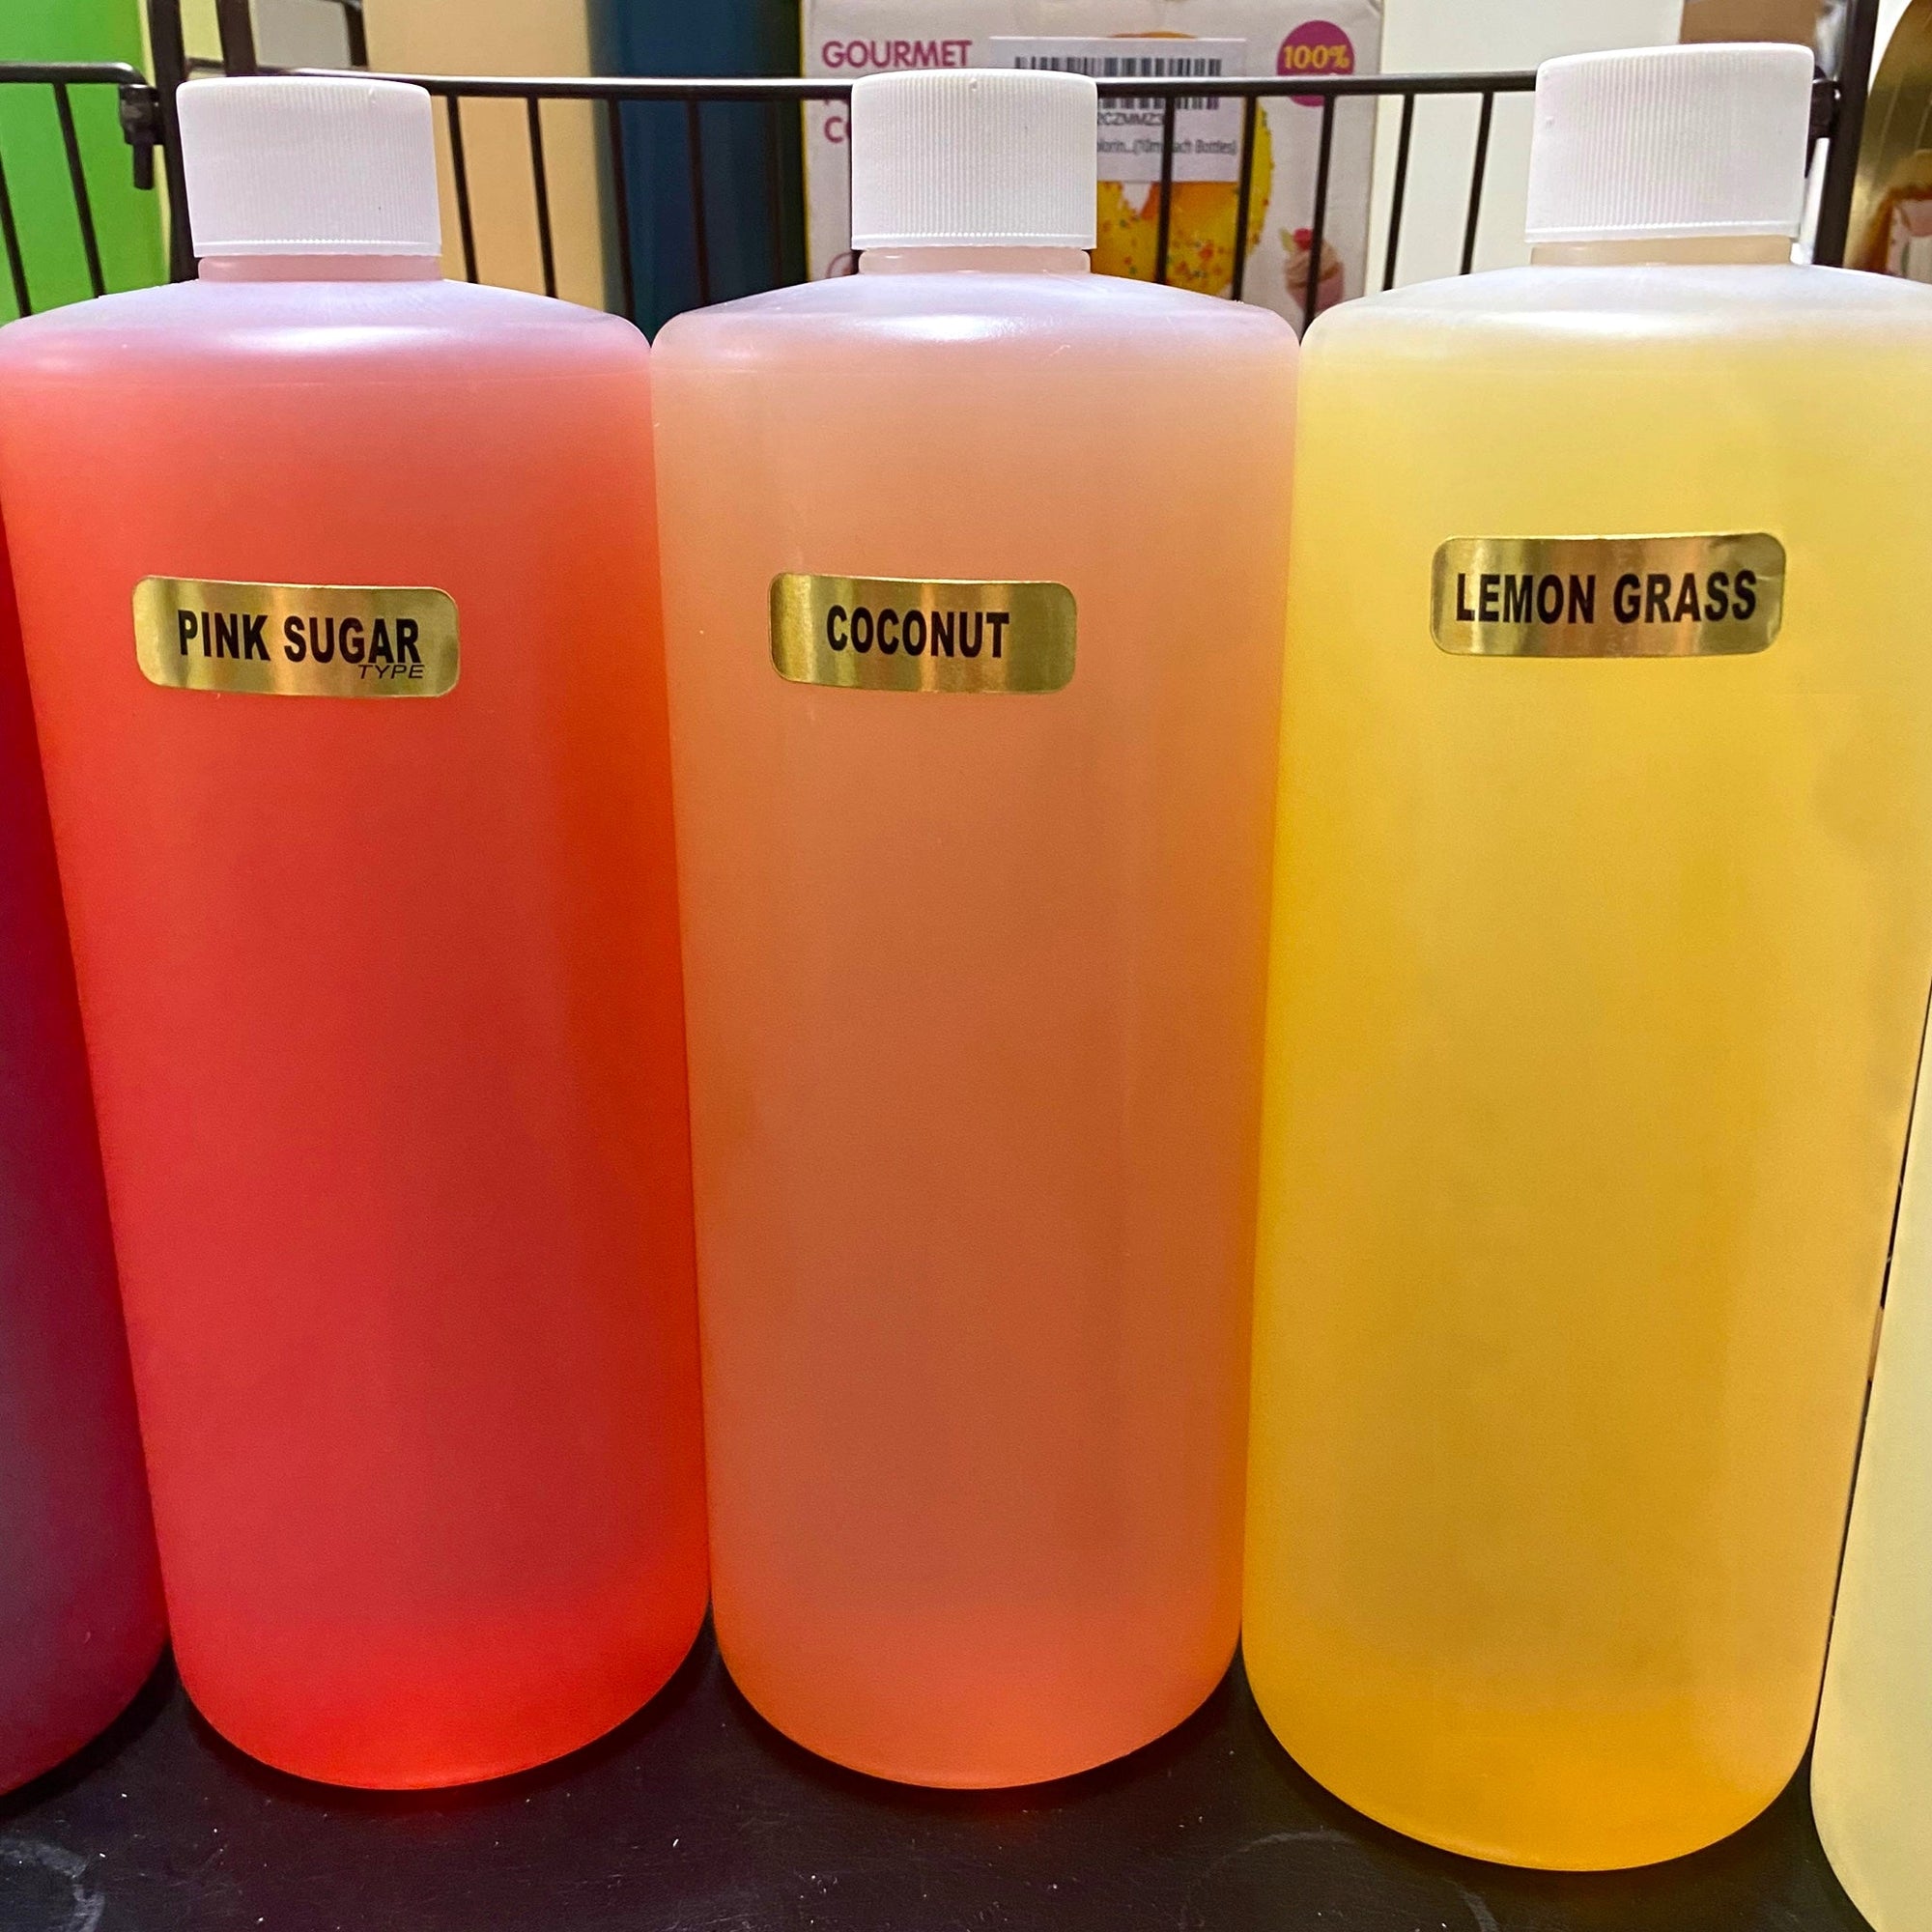 Pink Sugar Perfume/Body Oil Candle Soap Bath Bomb Incense Making